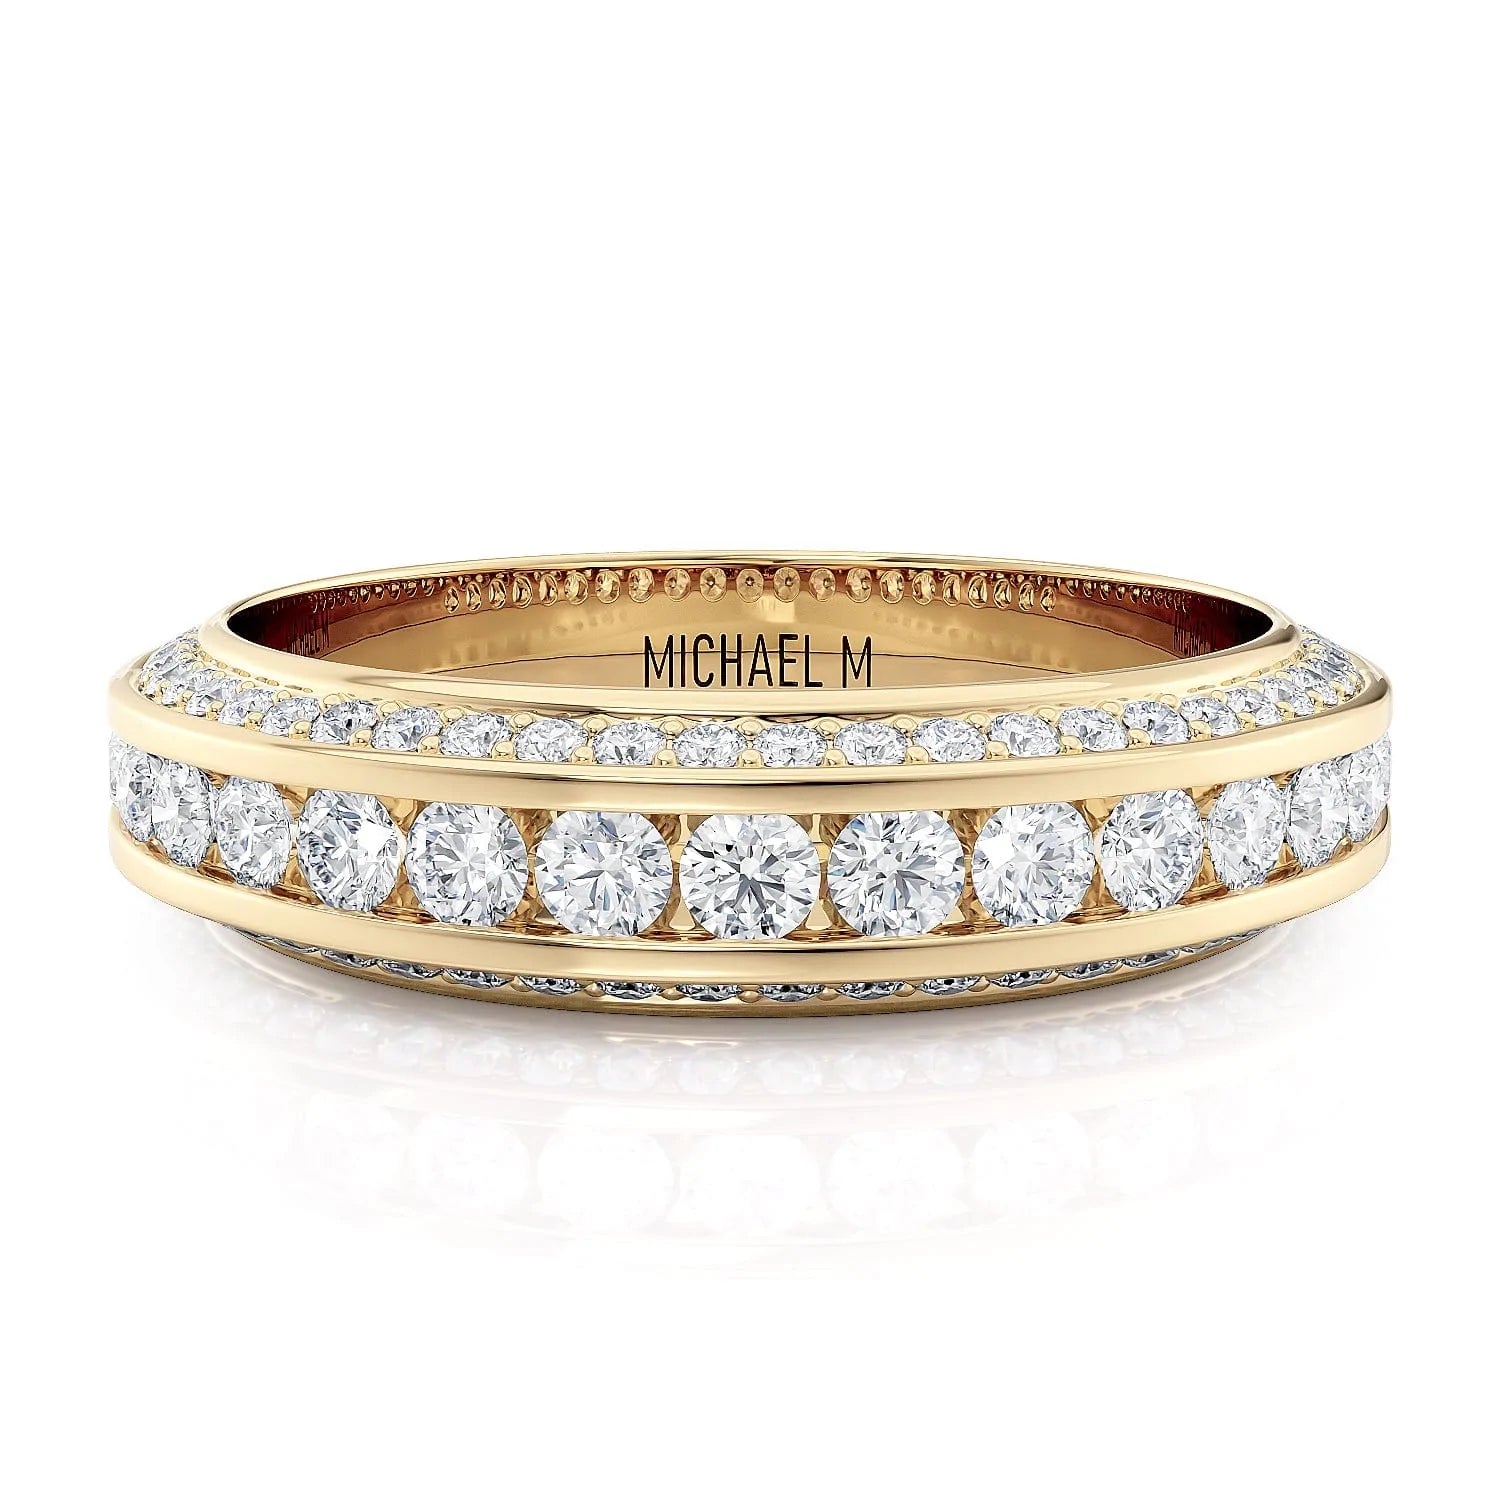 MICHAEL M Engagement Rings 18K Yellow Gold R797B R797B